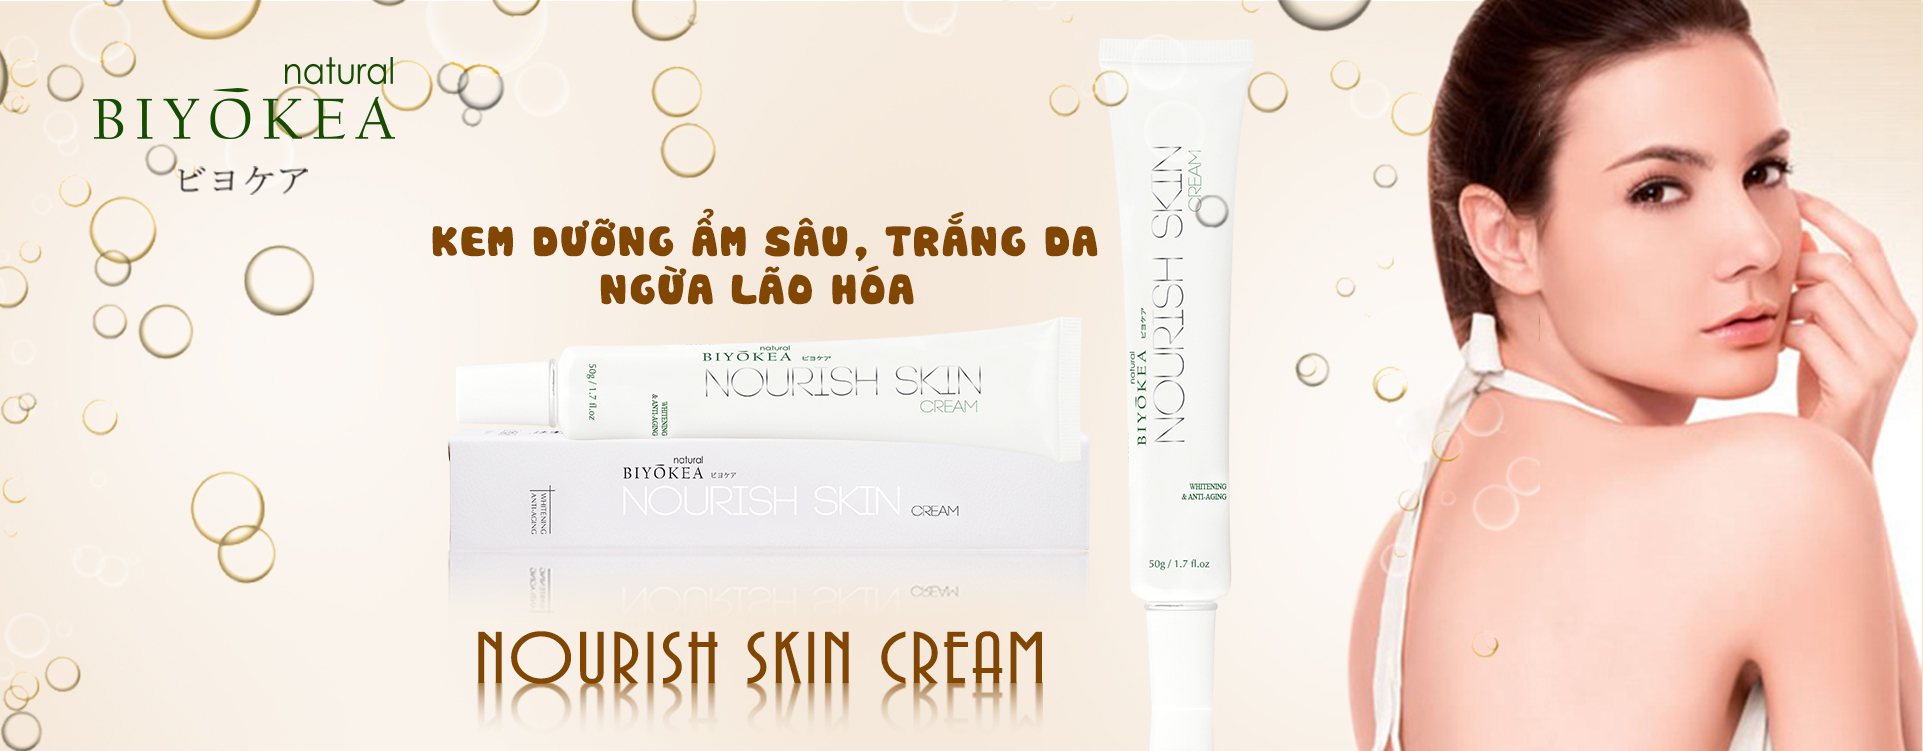 banner nourish skin cream